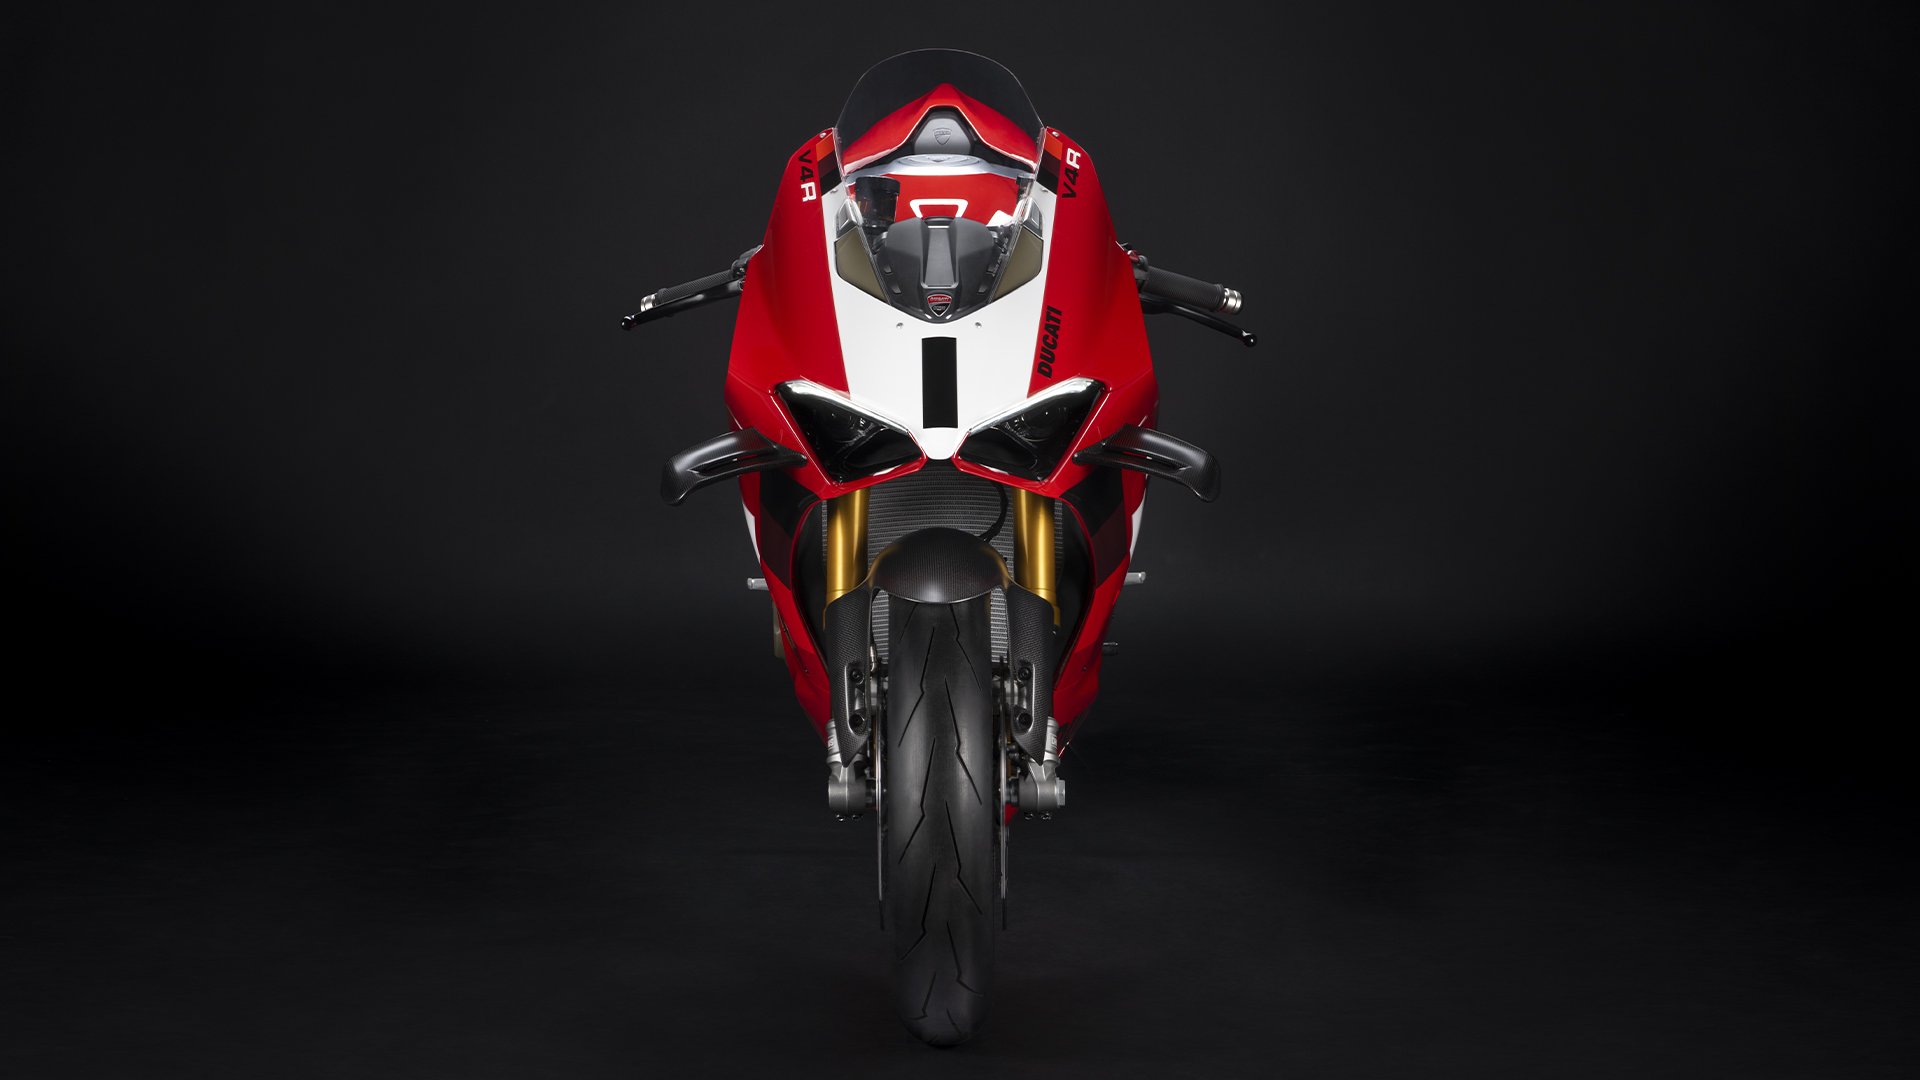 Ducati-Panigale-V4R-MY23-tech-specs-gallery-08-1920x1080.jpg